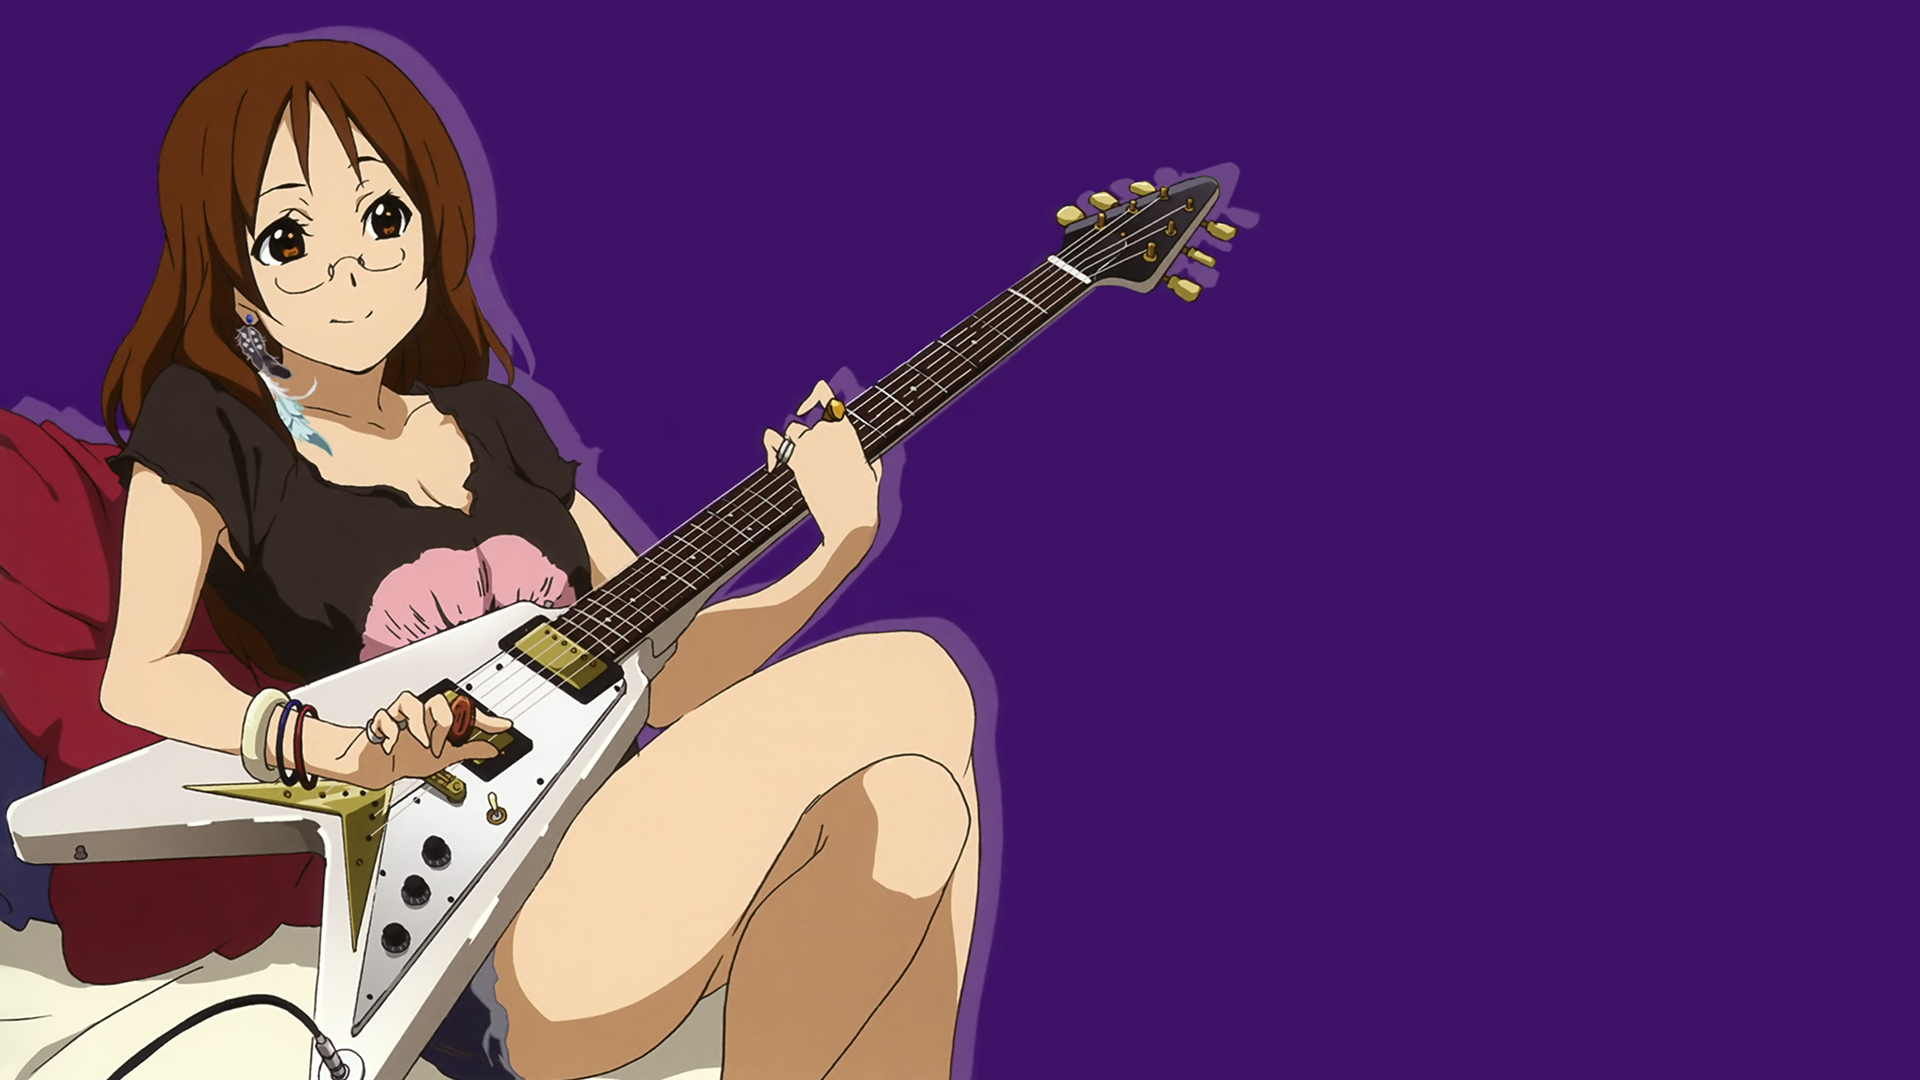 Anime 1920x1080 anime girls guitar anime musical instrument purple background